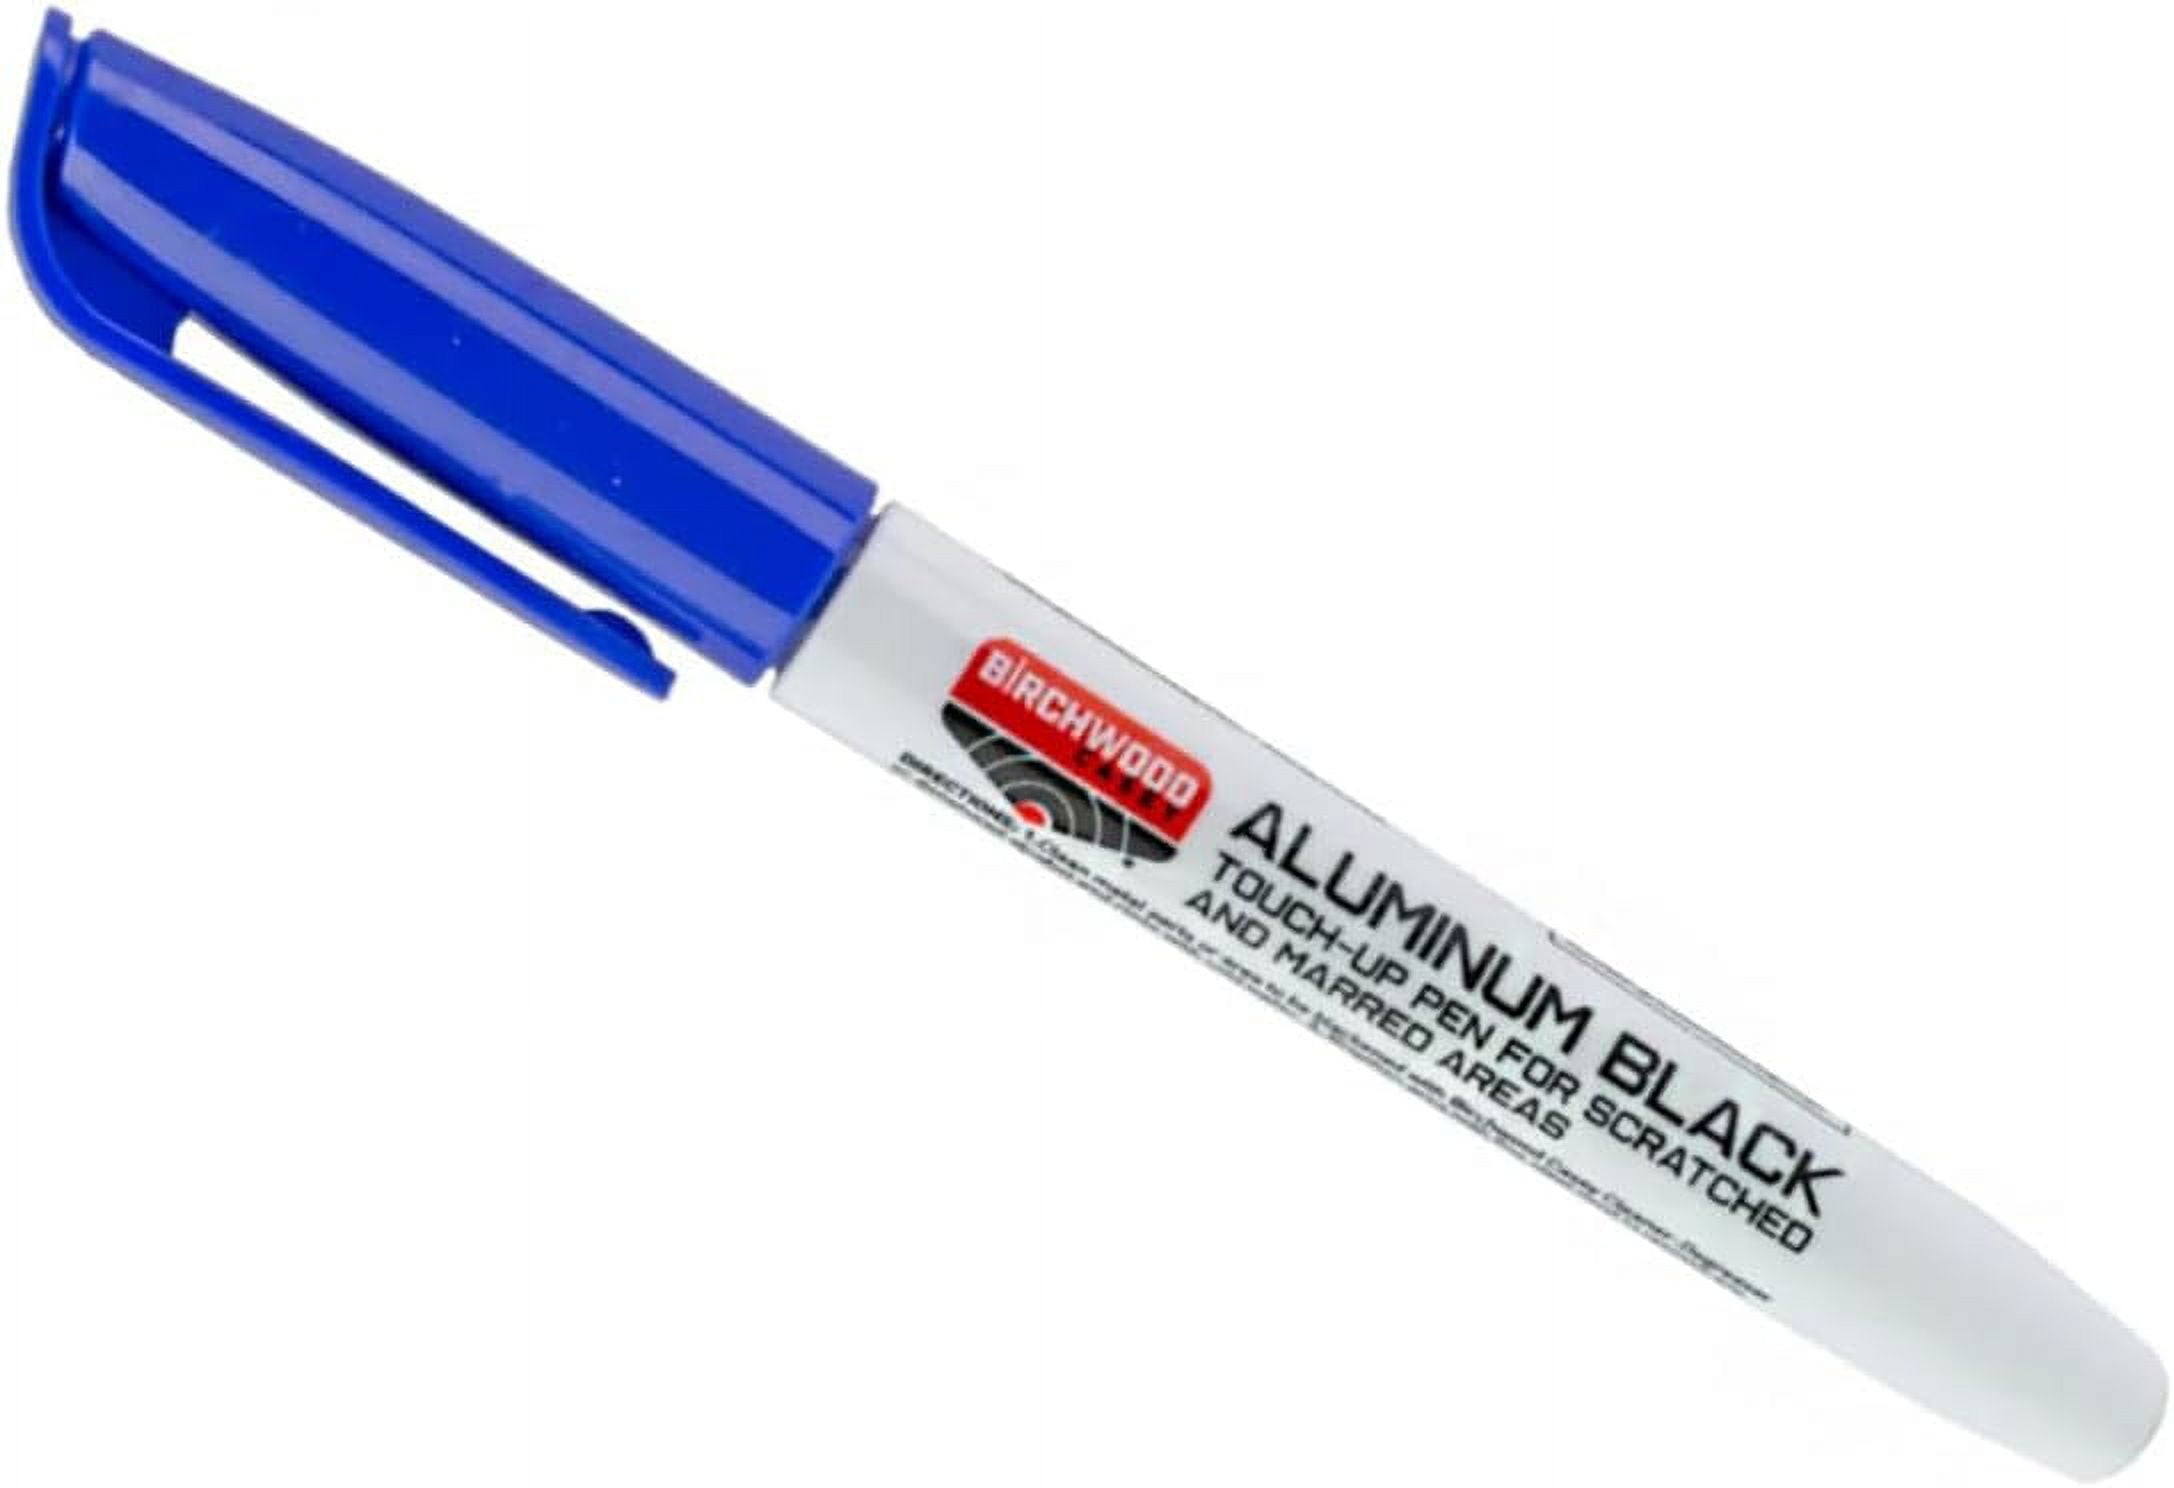 Birchwood Casey Aluminum Black - Touch Up Pen